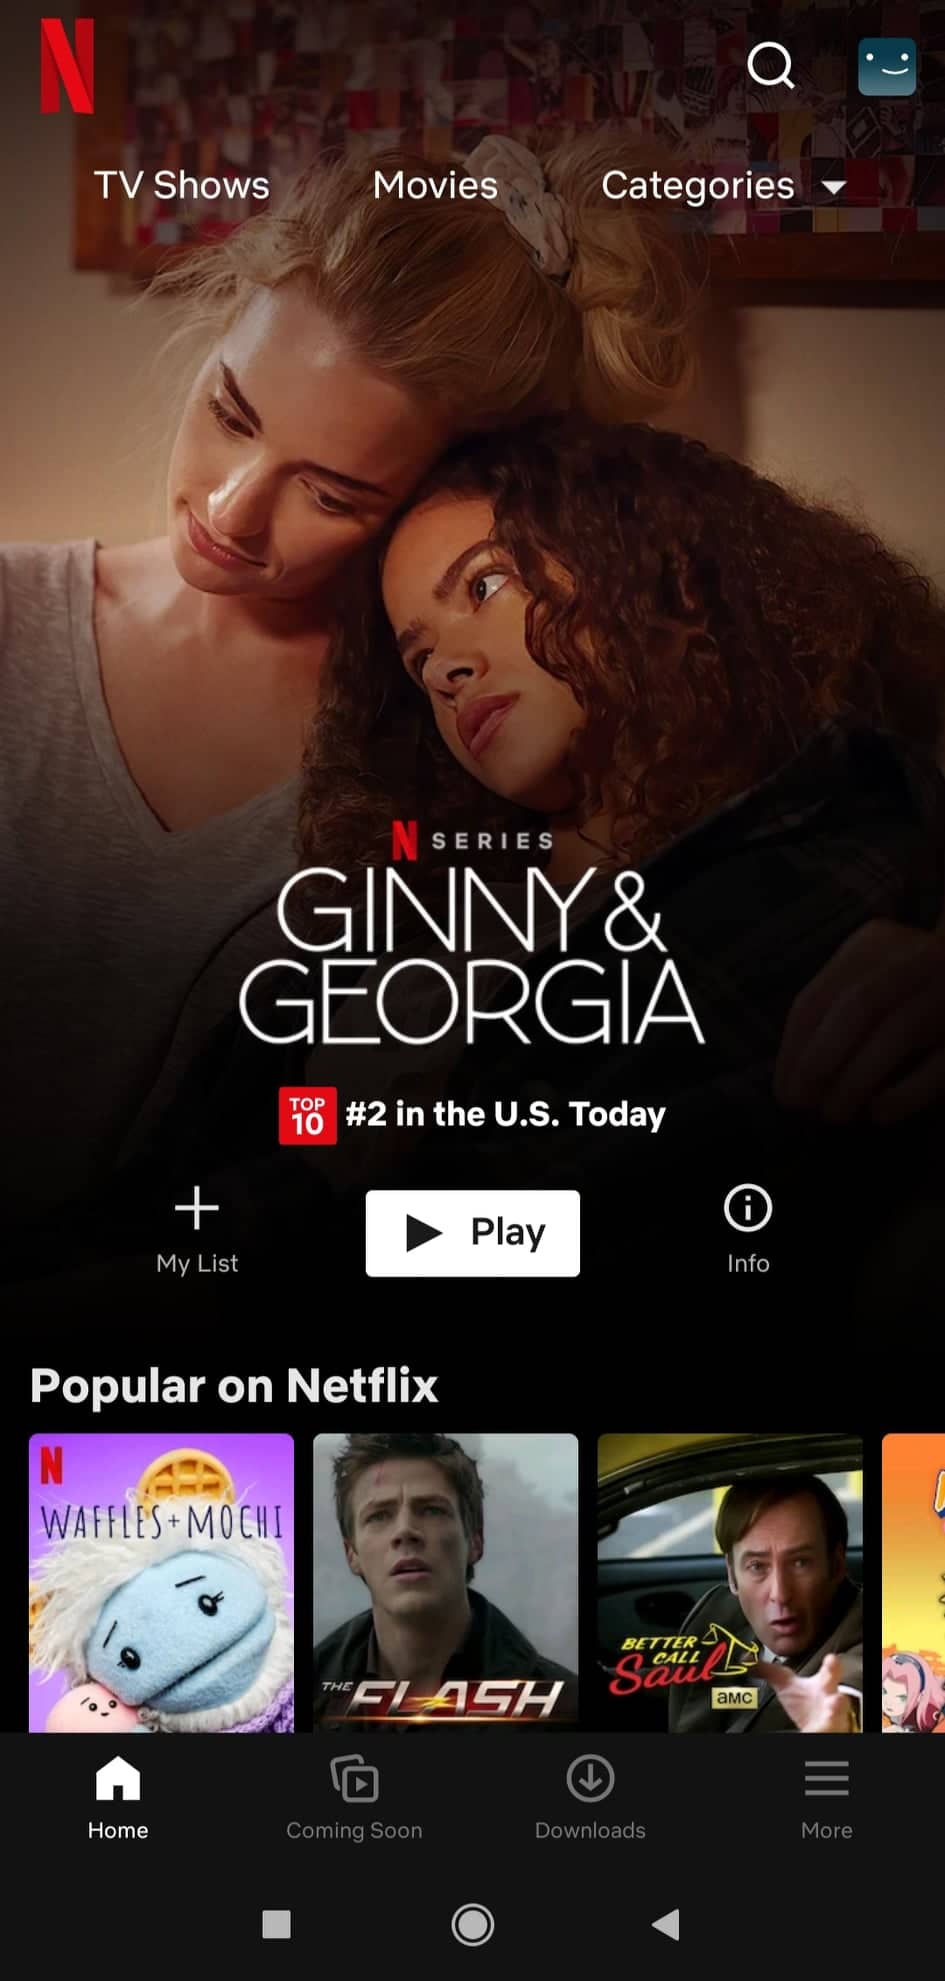 Netflix-App-Interface-in-Singapore